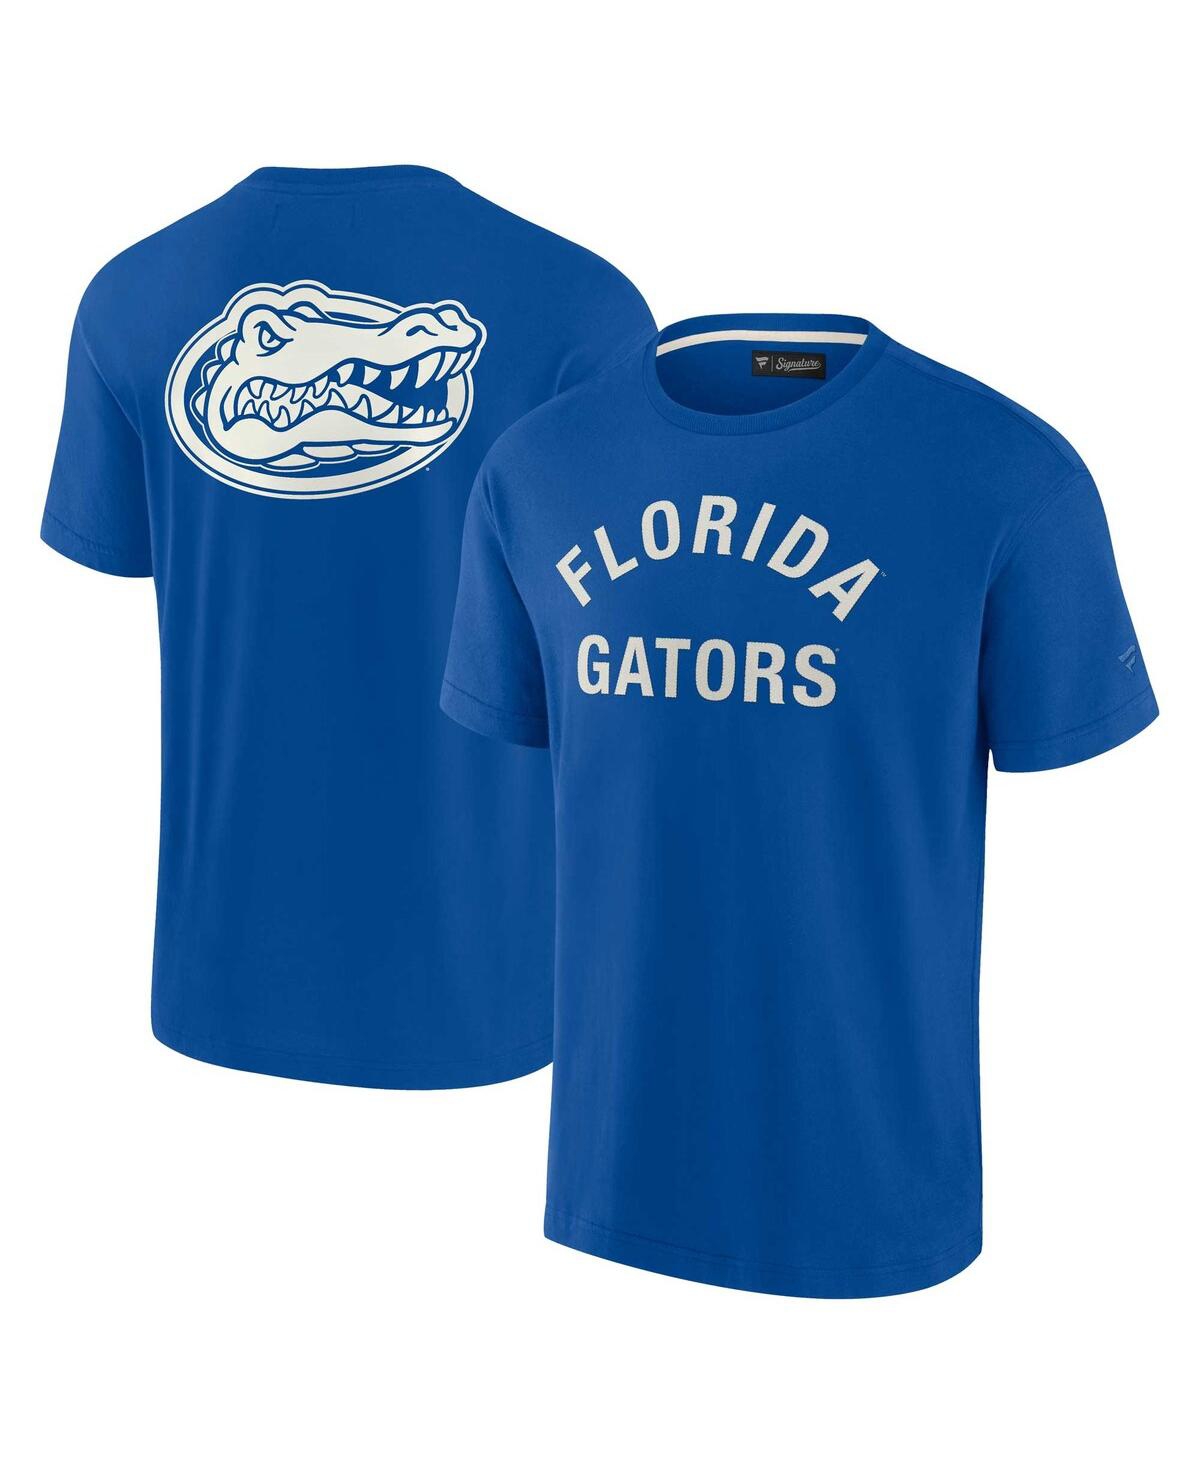 Men's and Women's Fanatics Signature Royal Florida Gators Super Soft Short Sleeve T-shirt - Royal